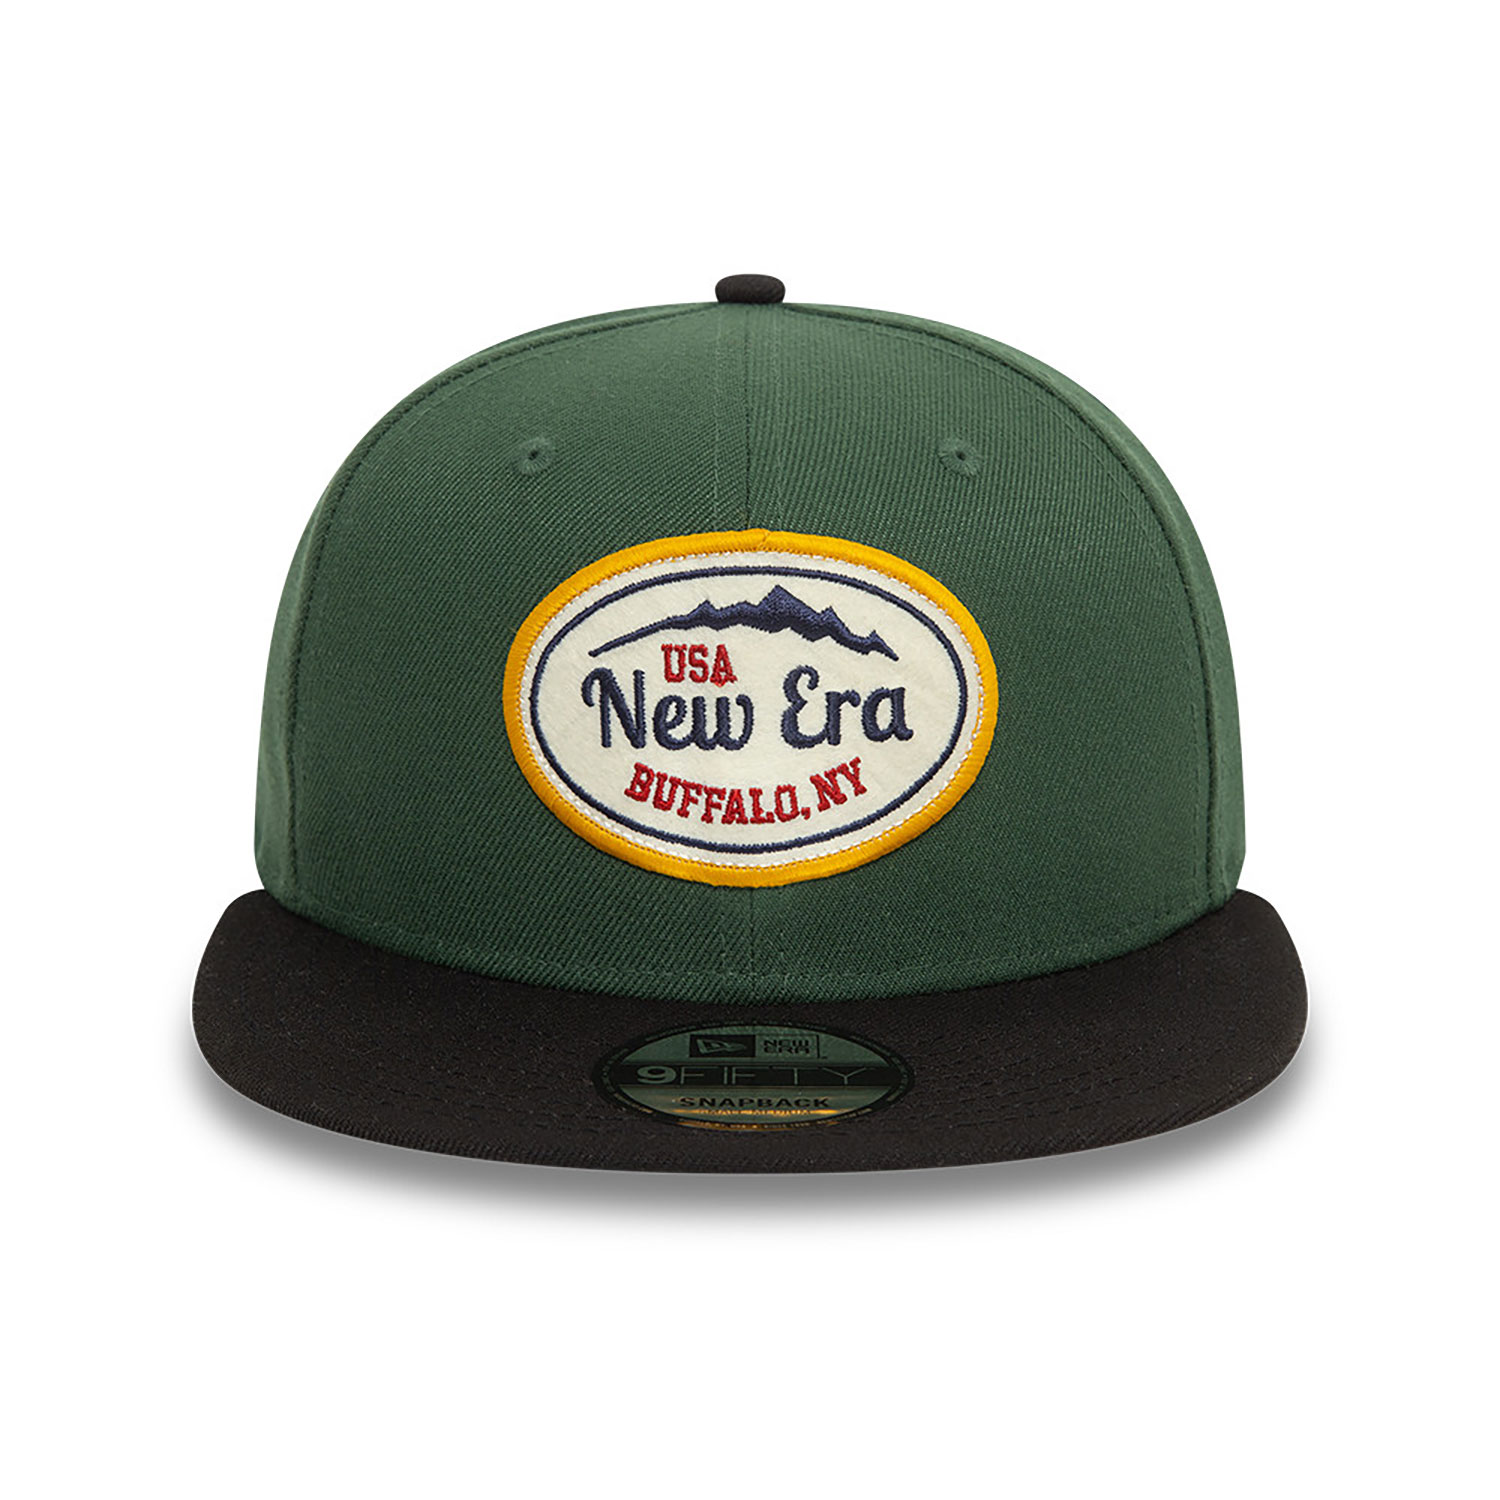 New Era Oval Patch Dark Green 9FIFTY Snapback Cap